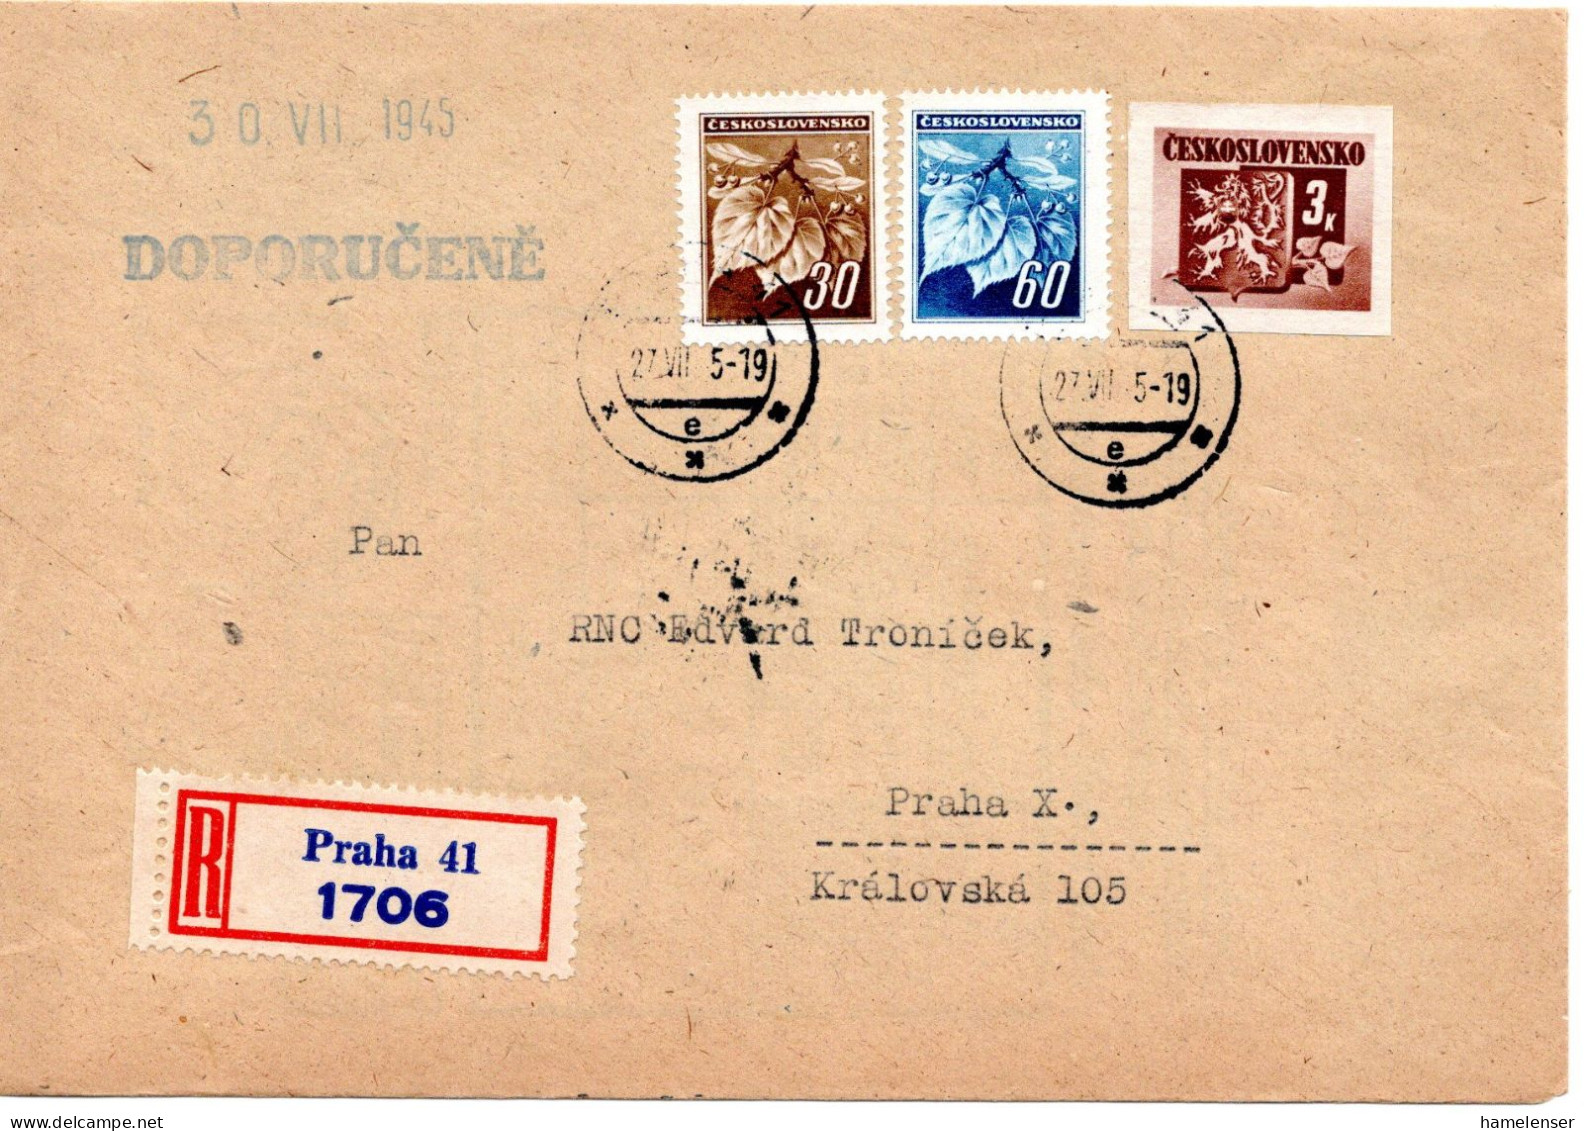 64692 - Tschechoslowakei - 1945 - 3K Wappen MiF A OrtsR-Bf PRAHA - Lettres & Documents